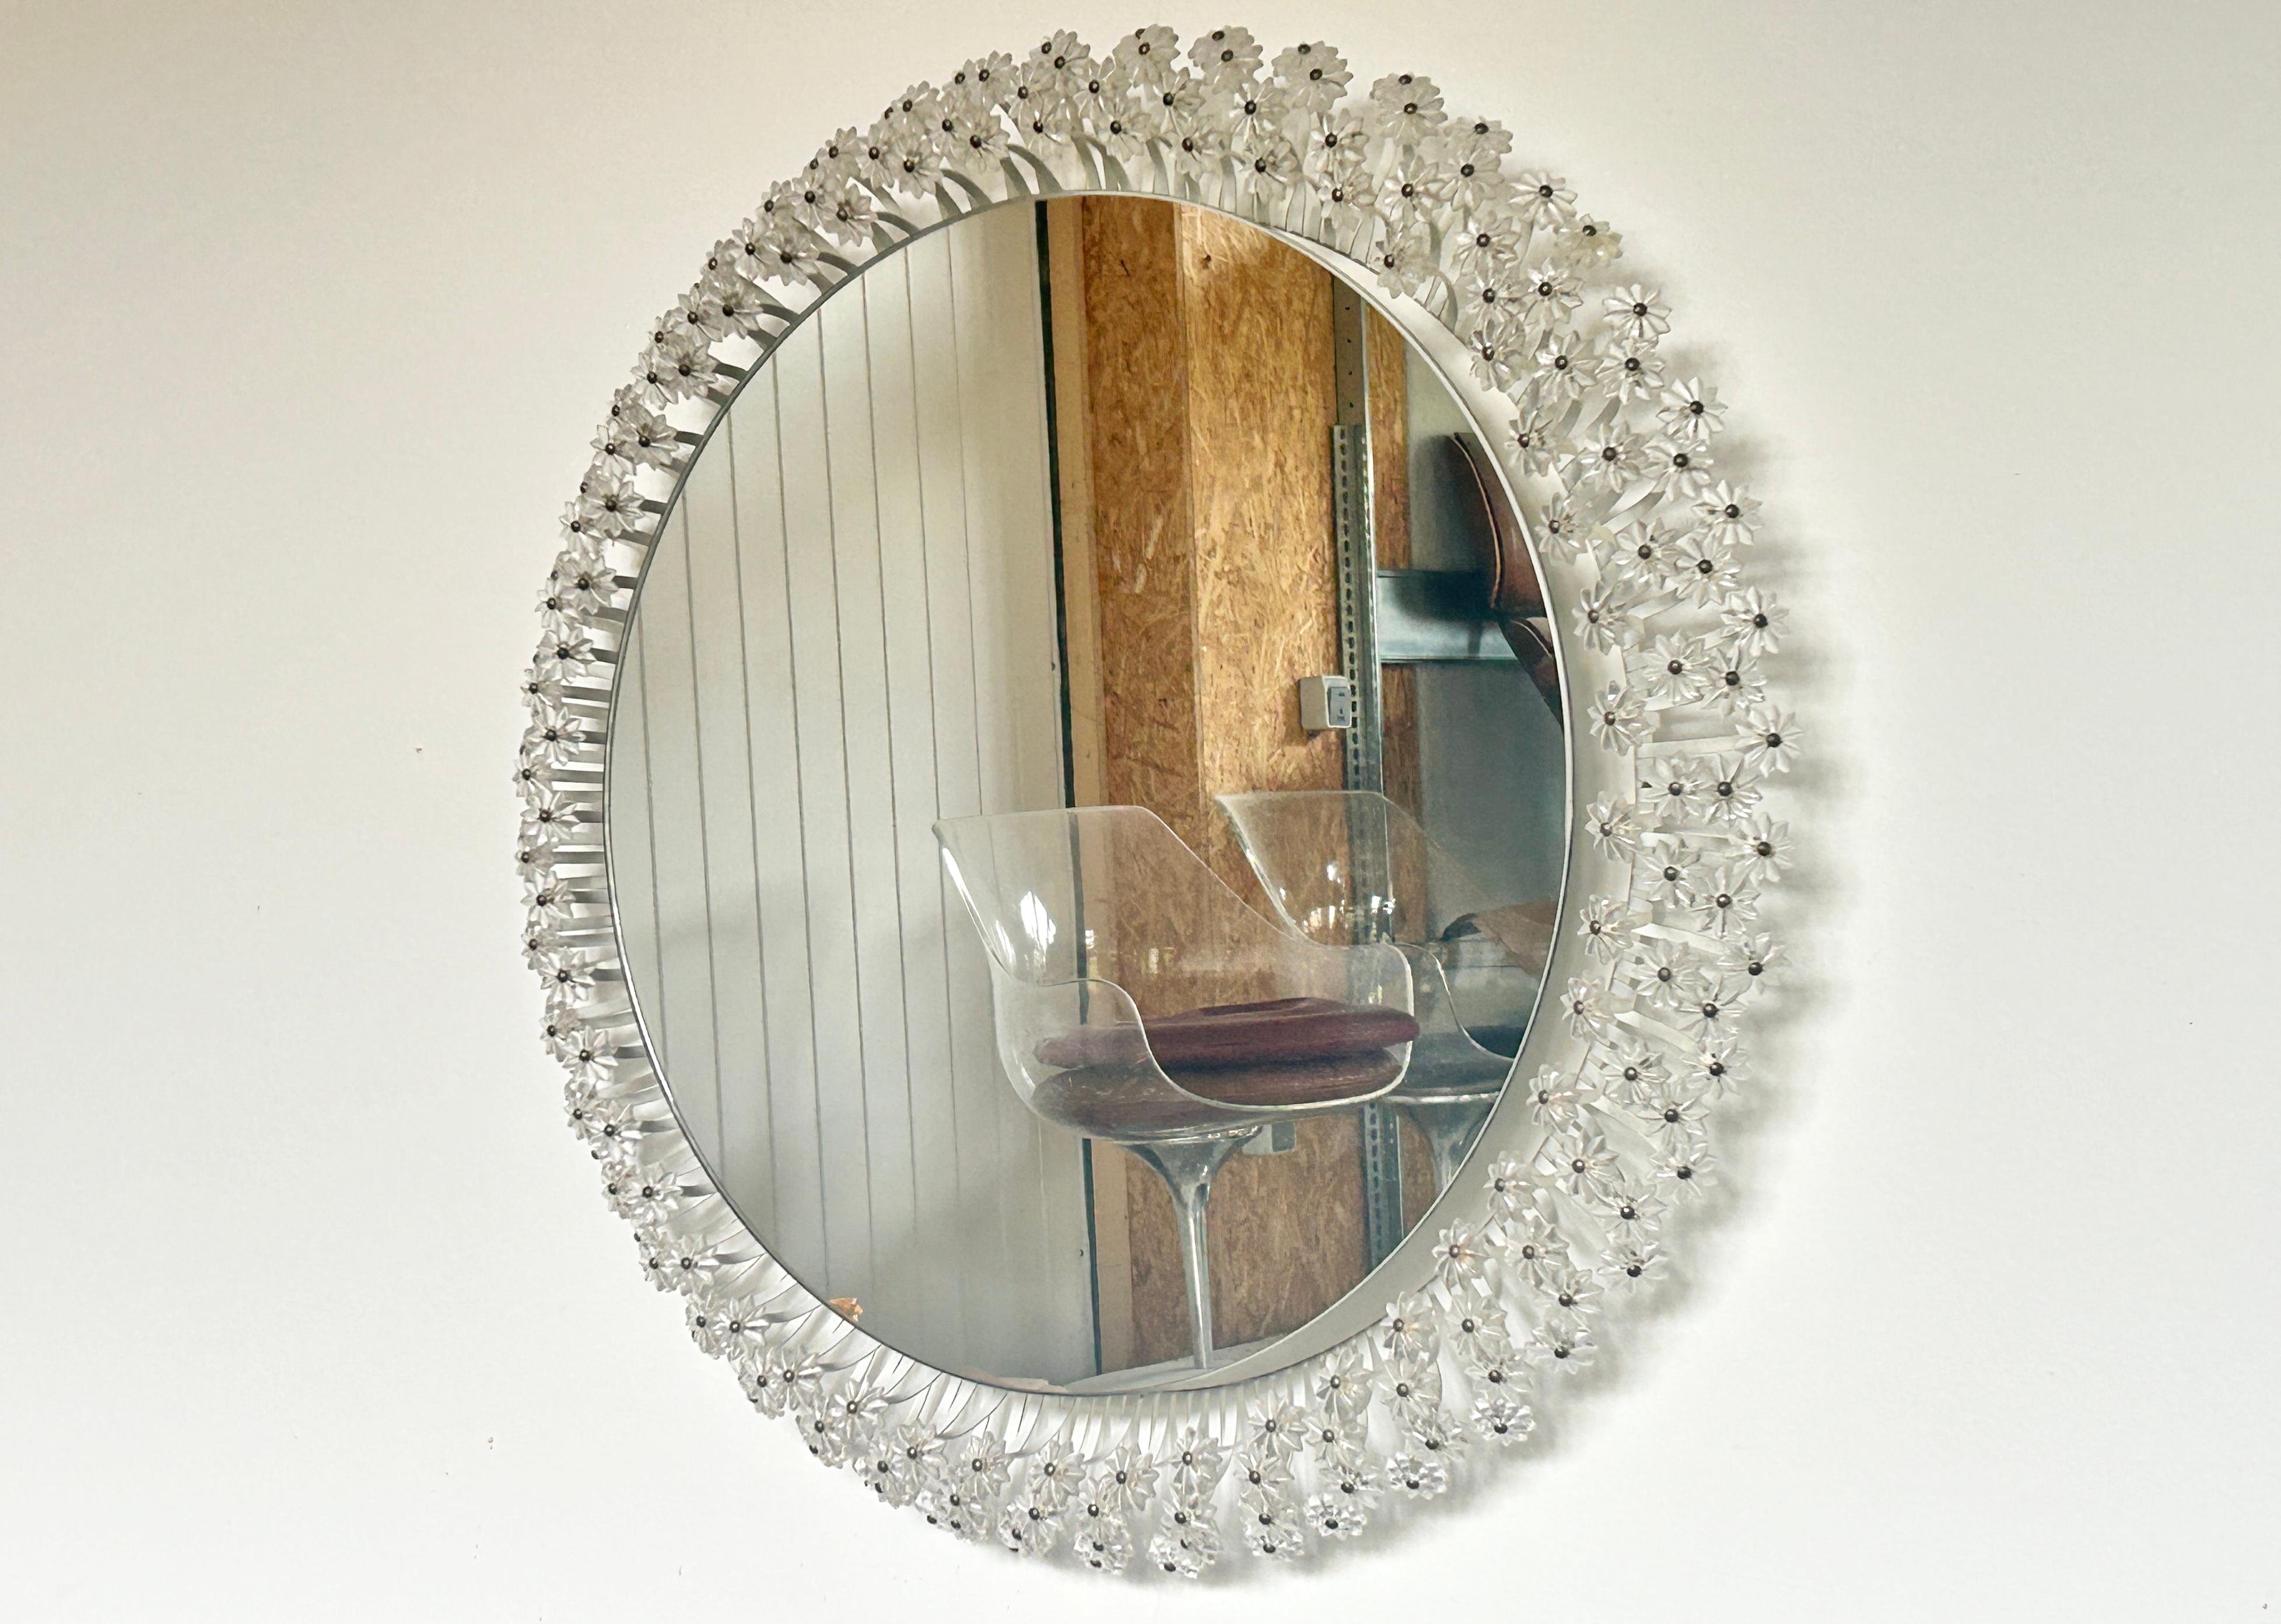 Steel Large illuminated mirror designed by Emil Stejnar for Rupert Nikoll